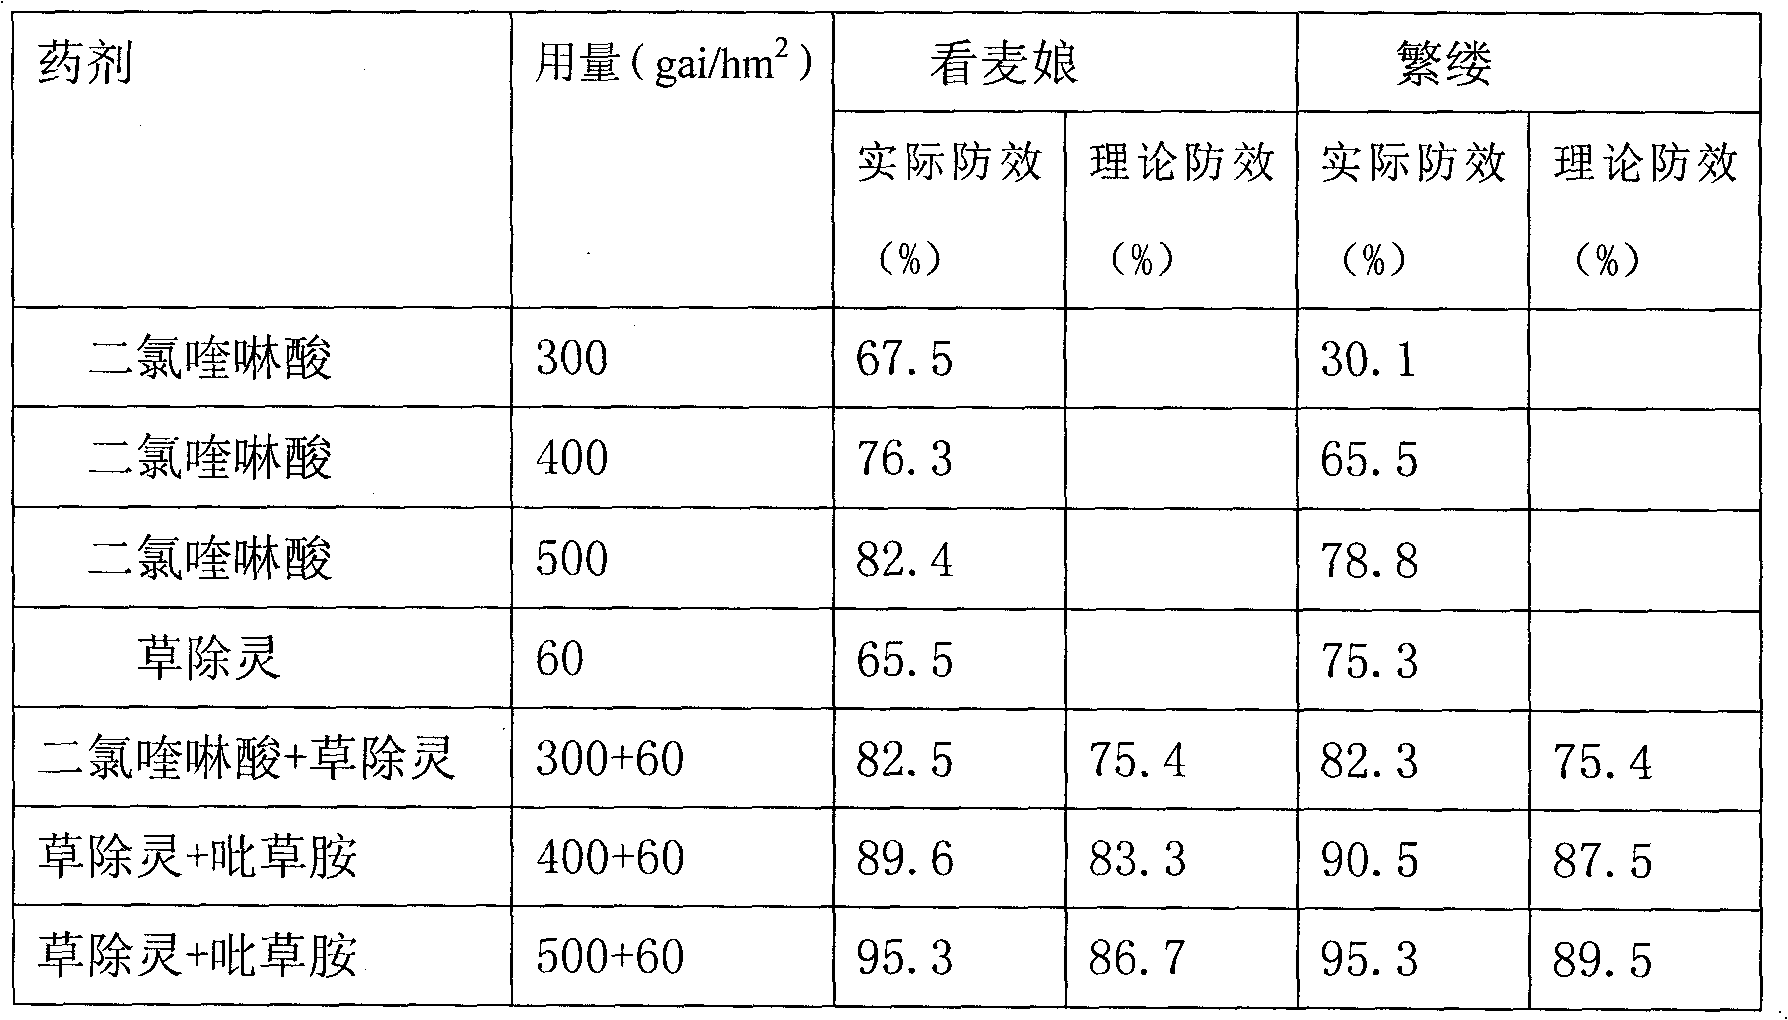 Herbicidal composition containing quinclorac and benazolin